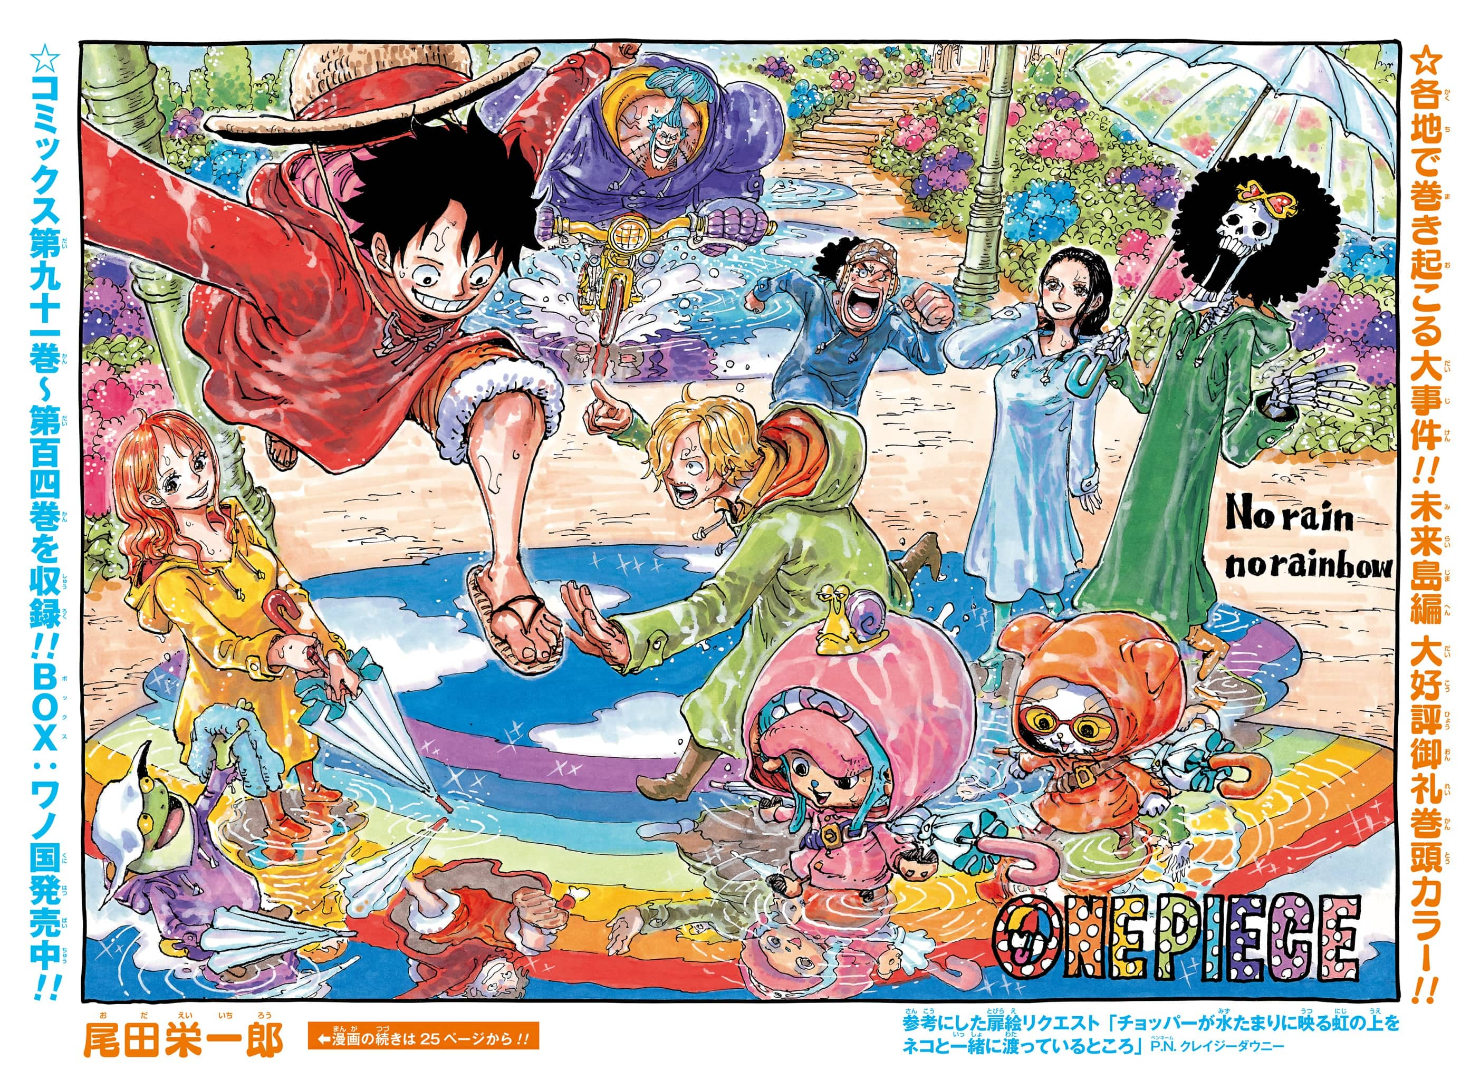 Den Den Mushi, One Piece Wiki